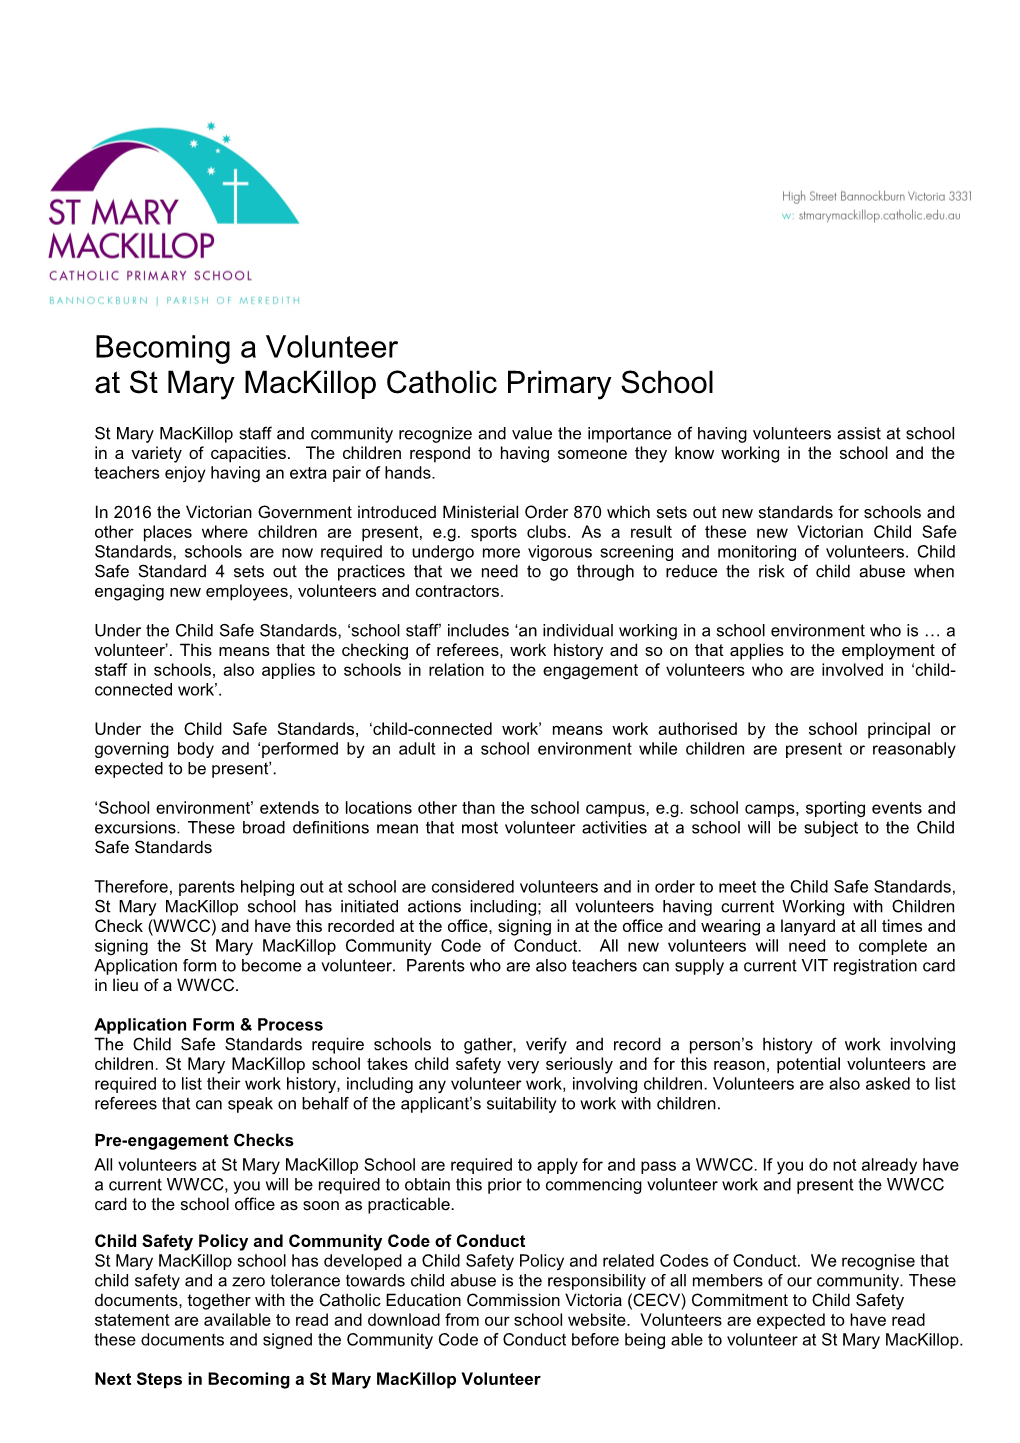 At St Mary Mackillopcatholic Primary School